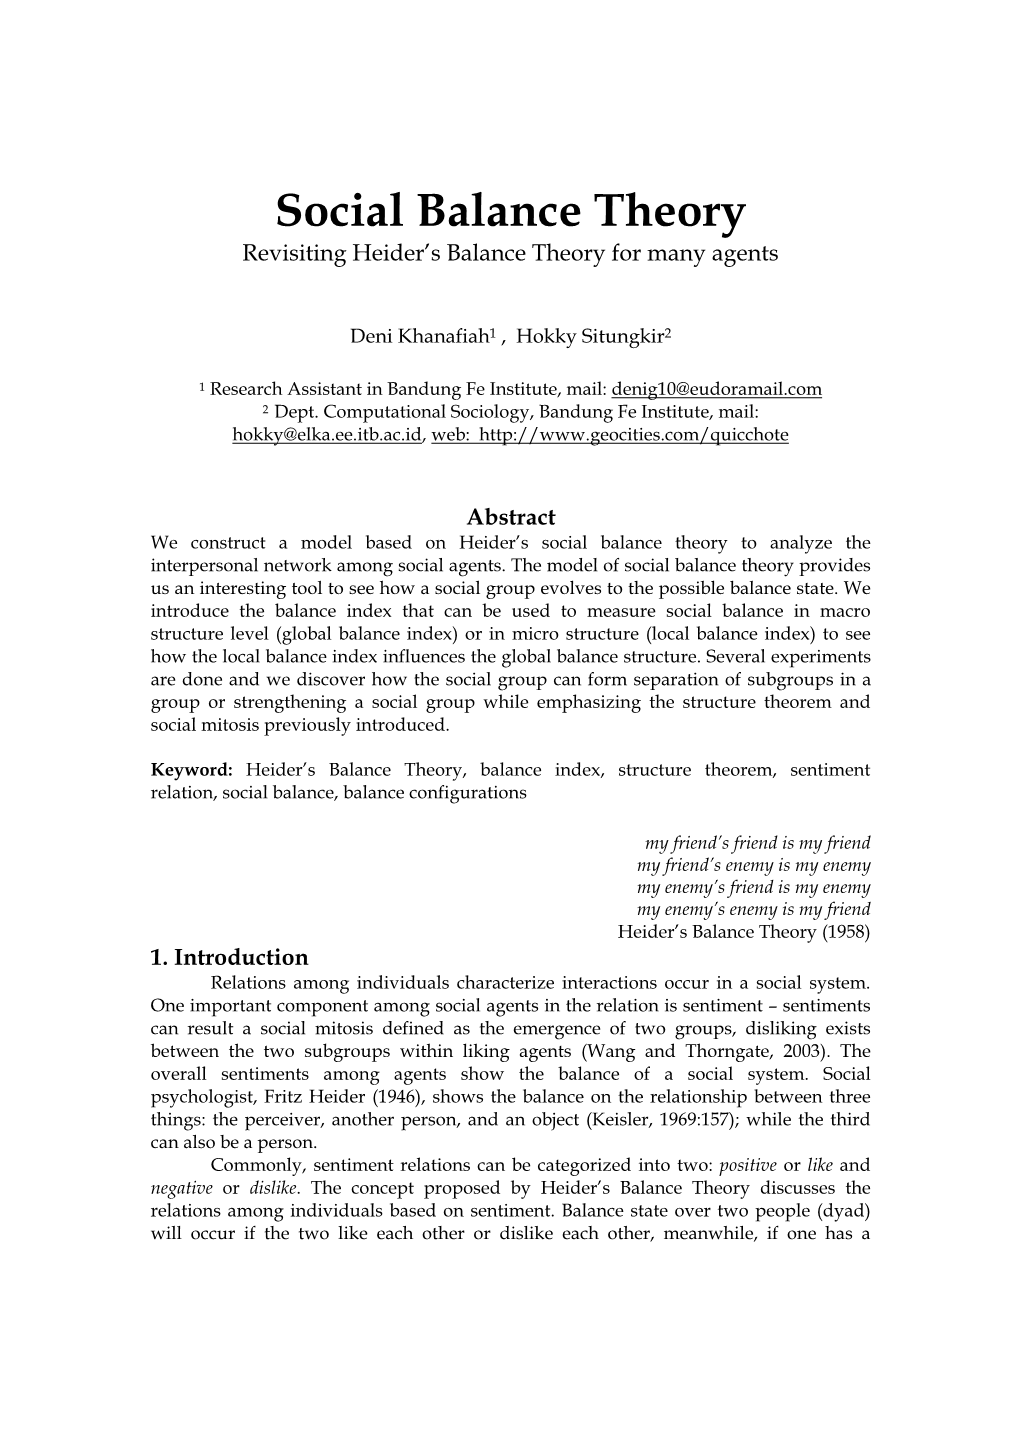 Social Balance Theory Revisiting Heider’S Balance Theory for Many Agents